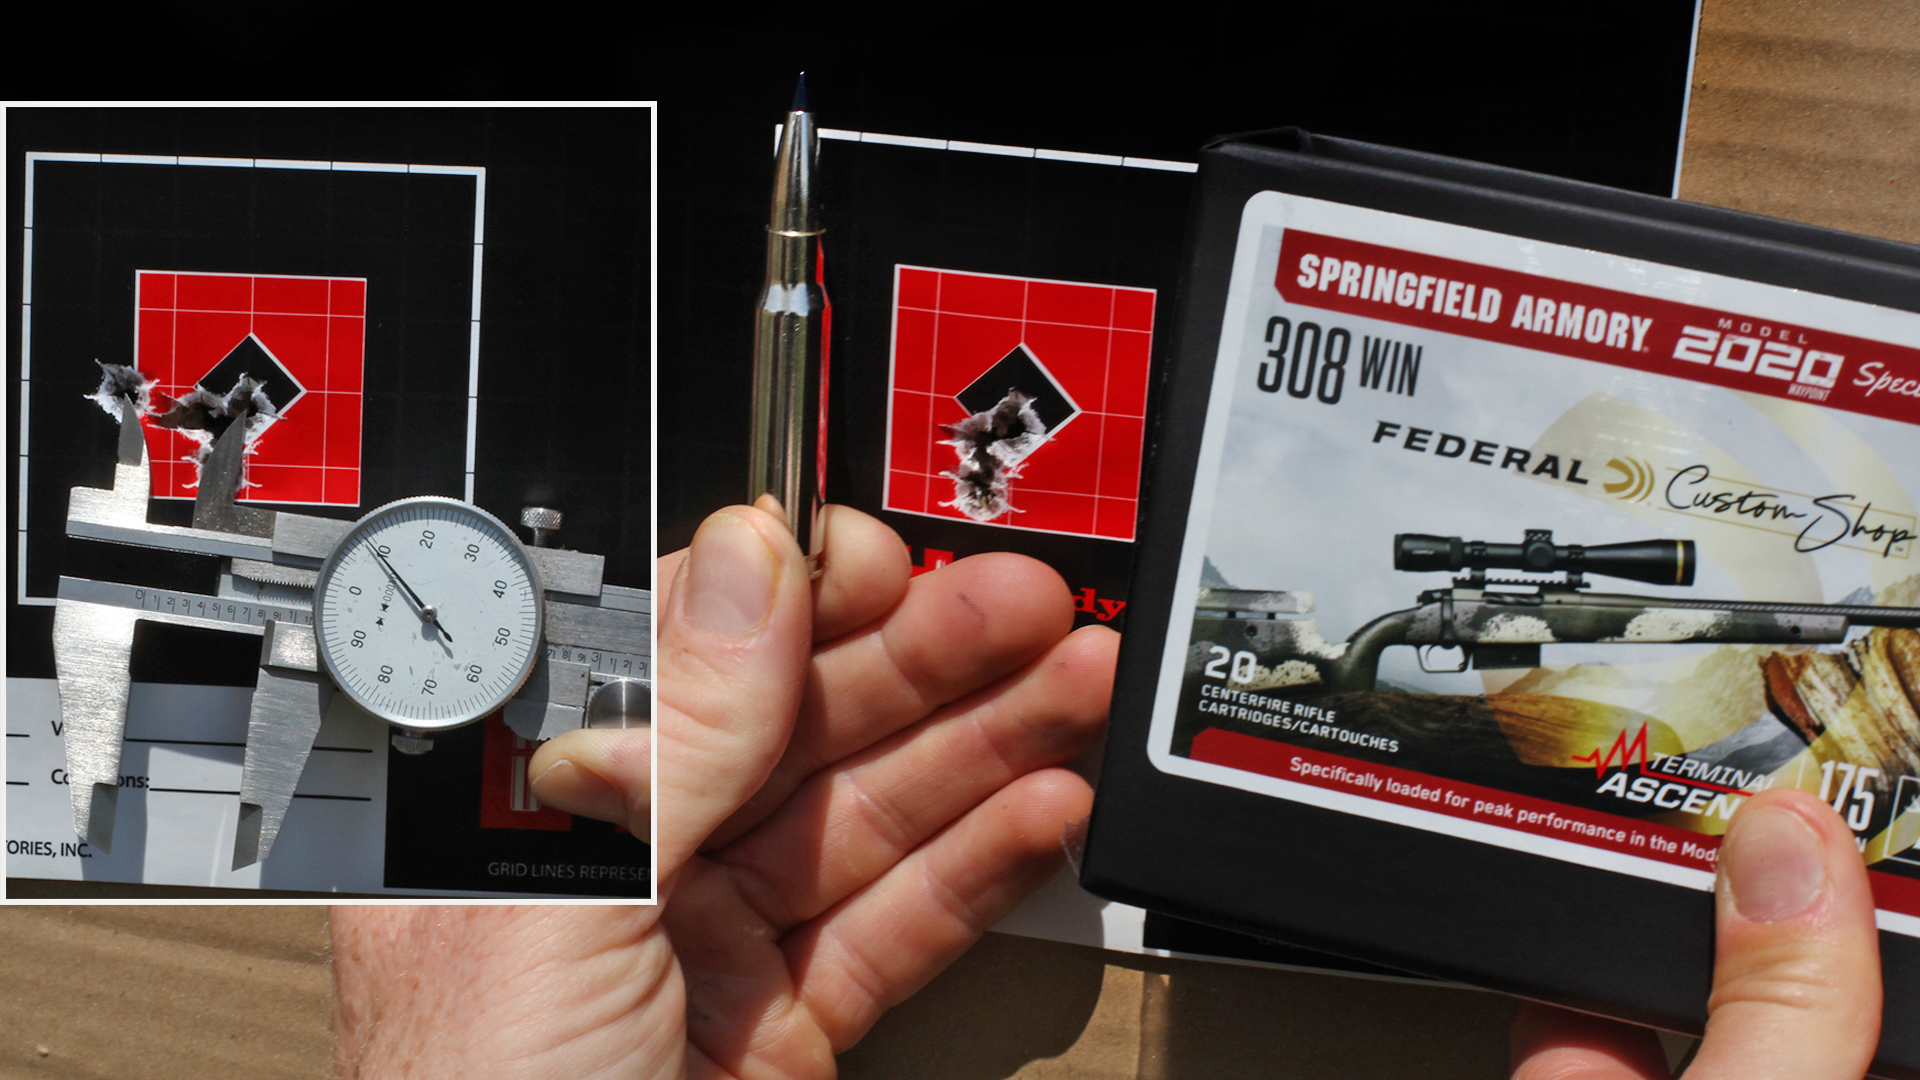 Federal Custom Shop ammunition accruacy red/black target dial caliper measurement